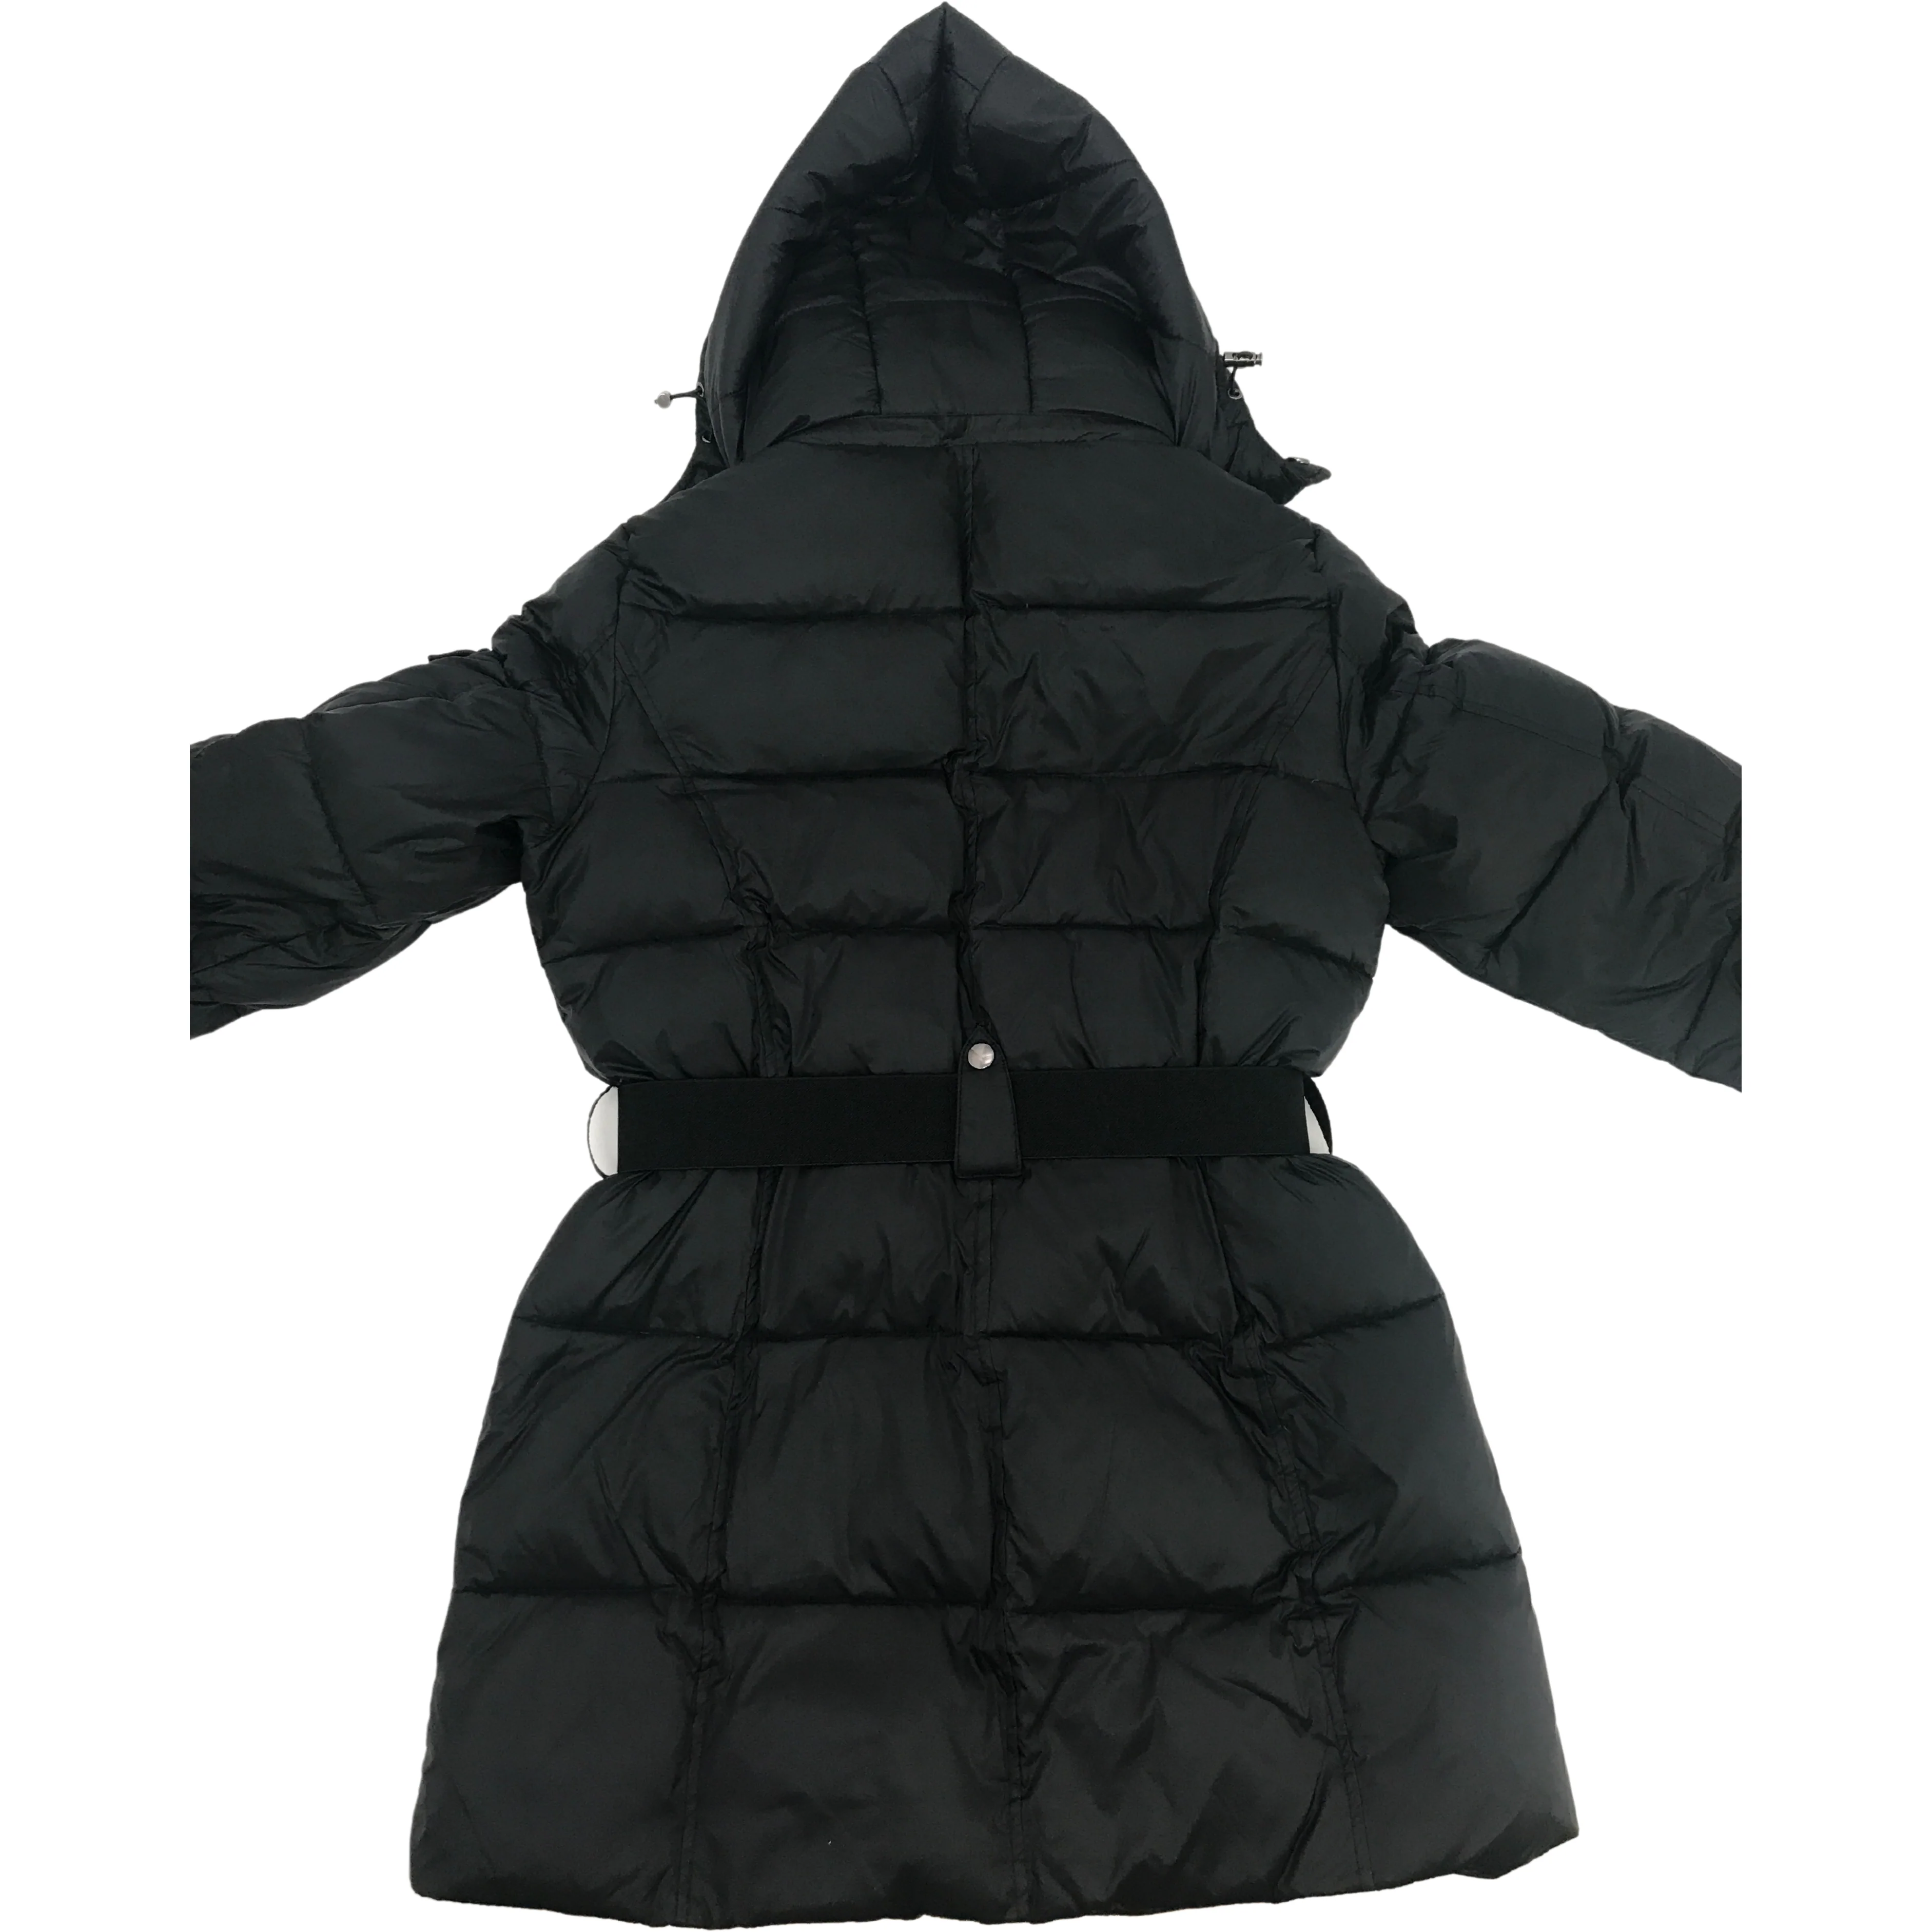 Vince Camuto Women's Winter Jacket / Black / Winter Coat / Various Sizes